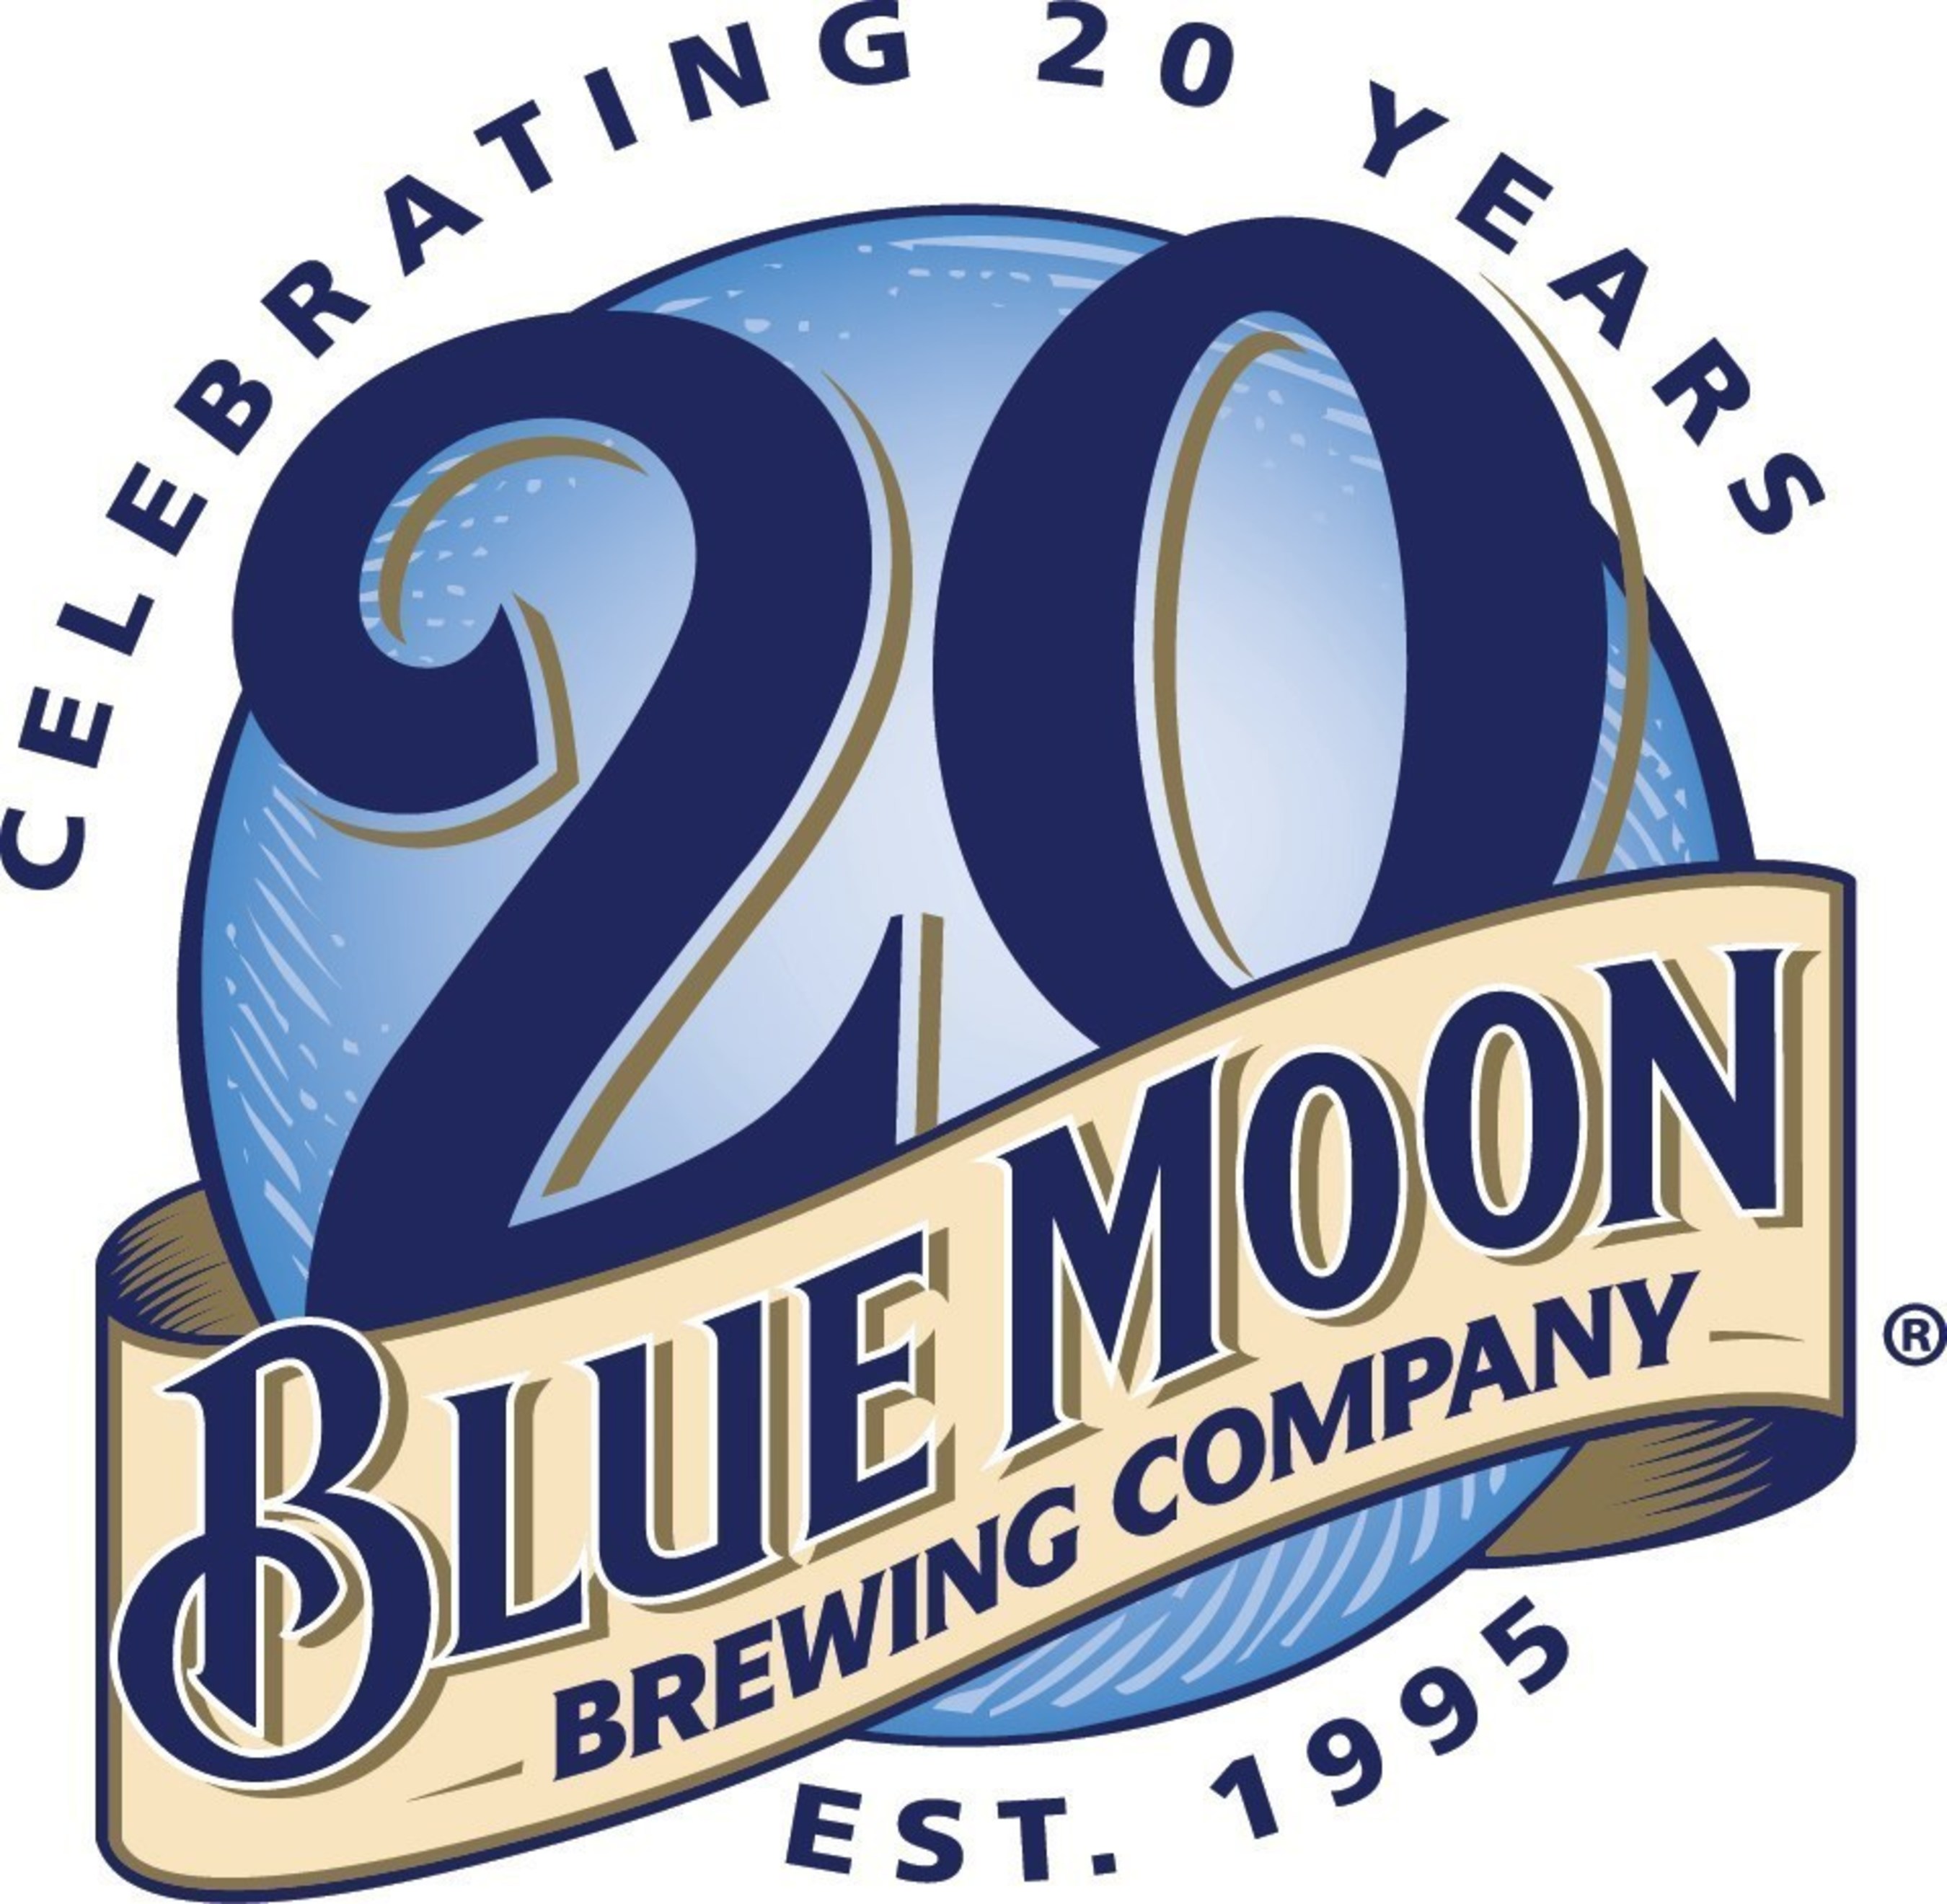 Blue Moon Brewing Company 20th Anniversary Logo